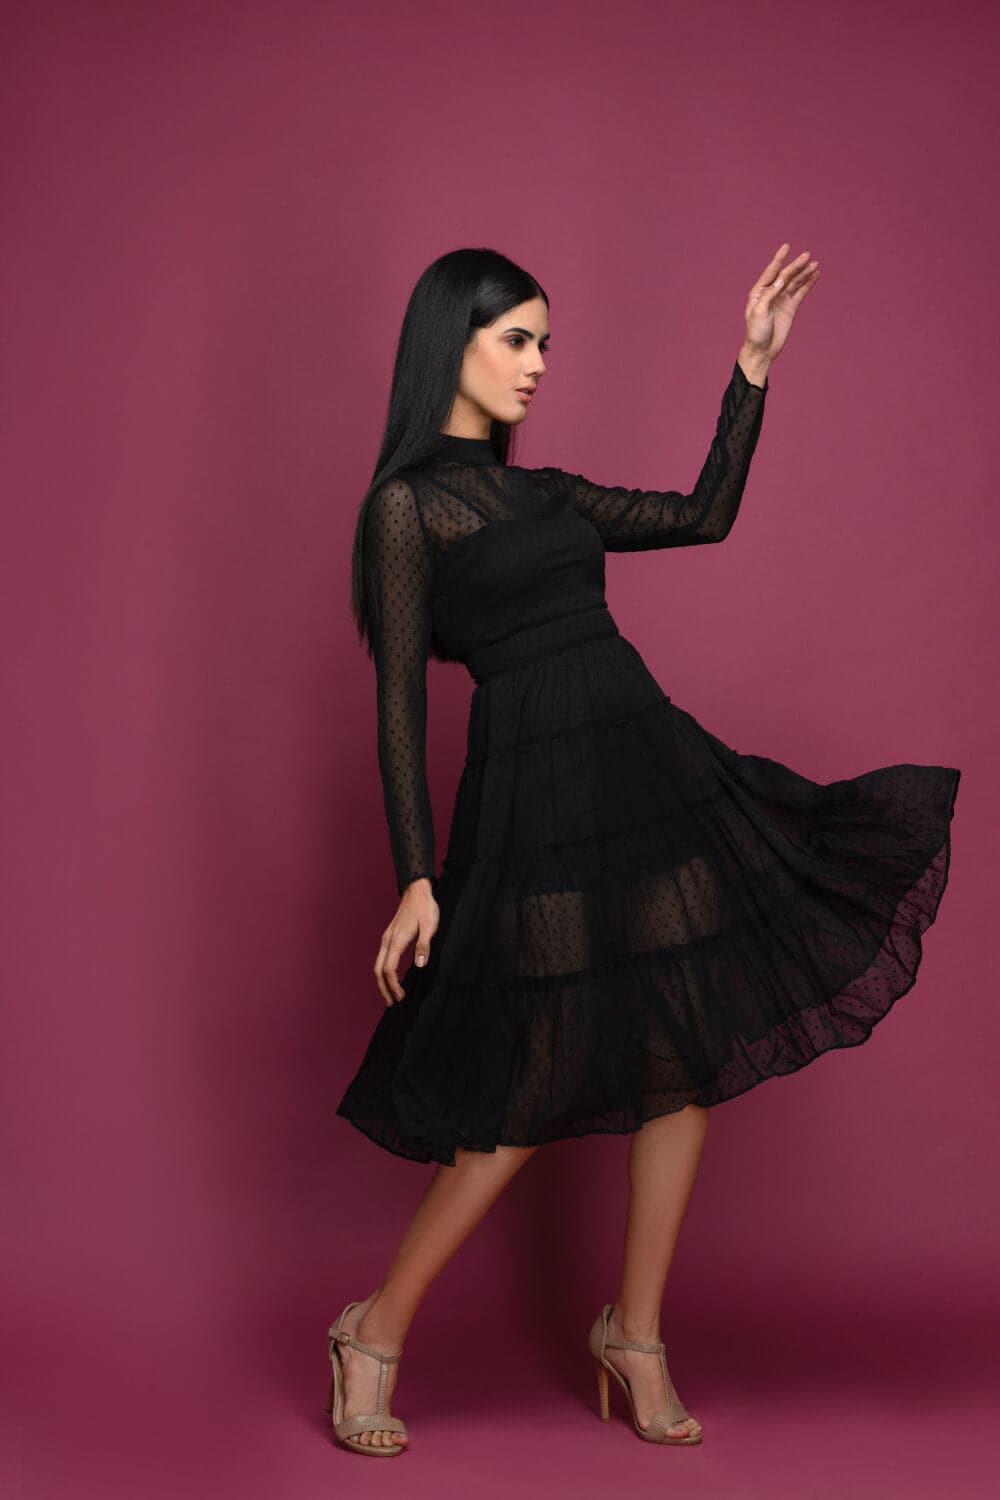 Black Angel Dress